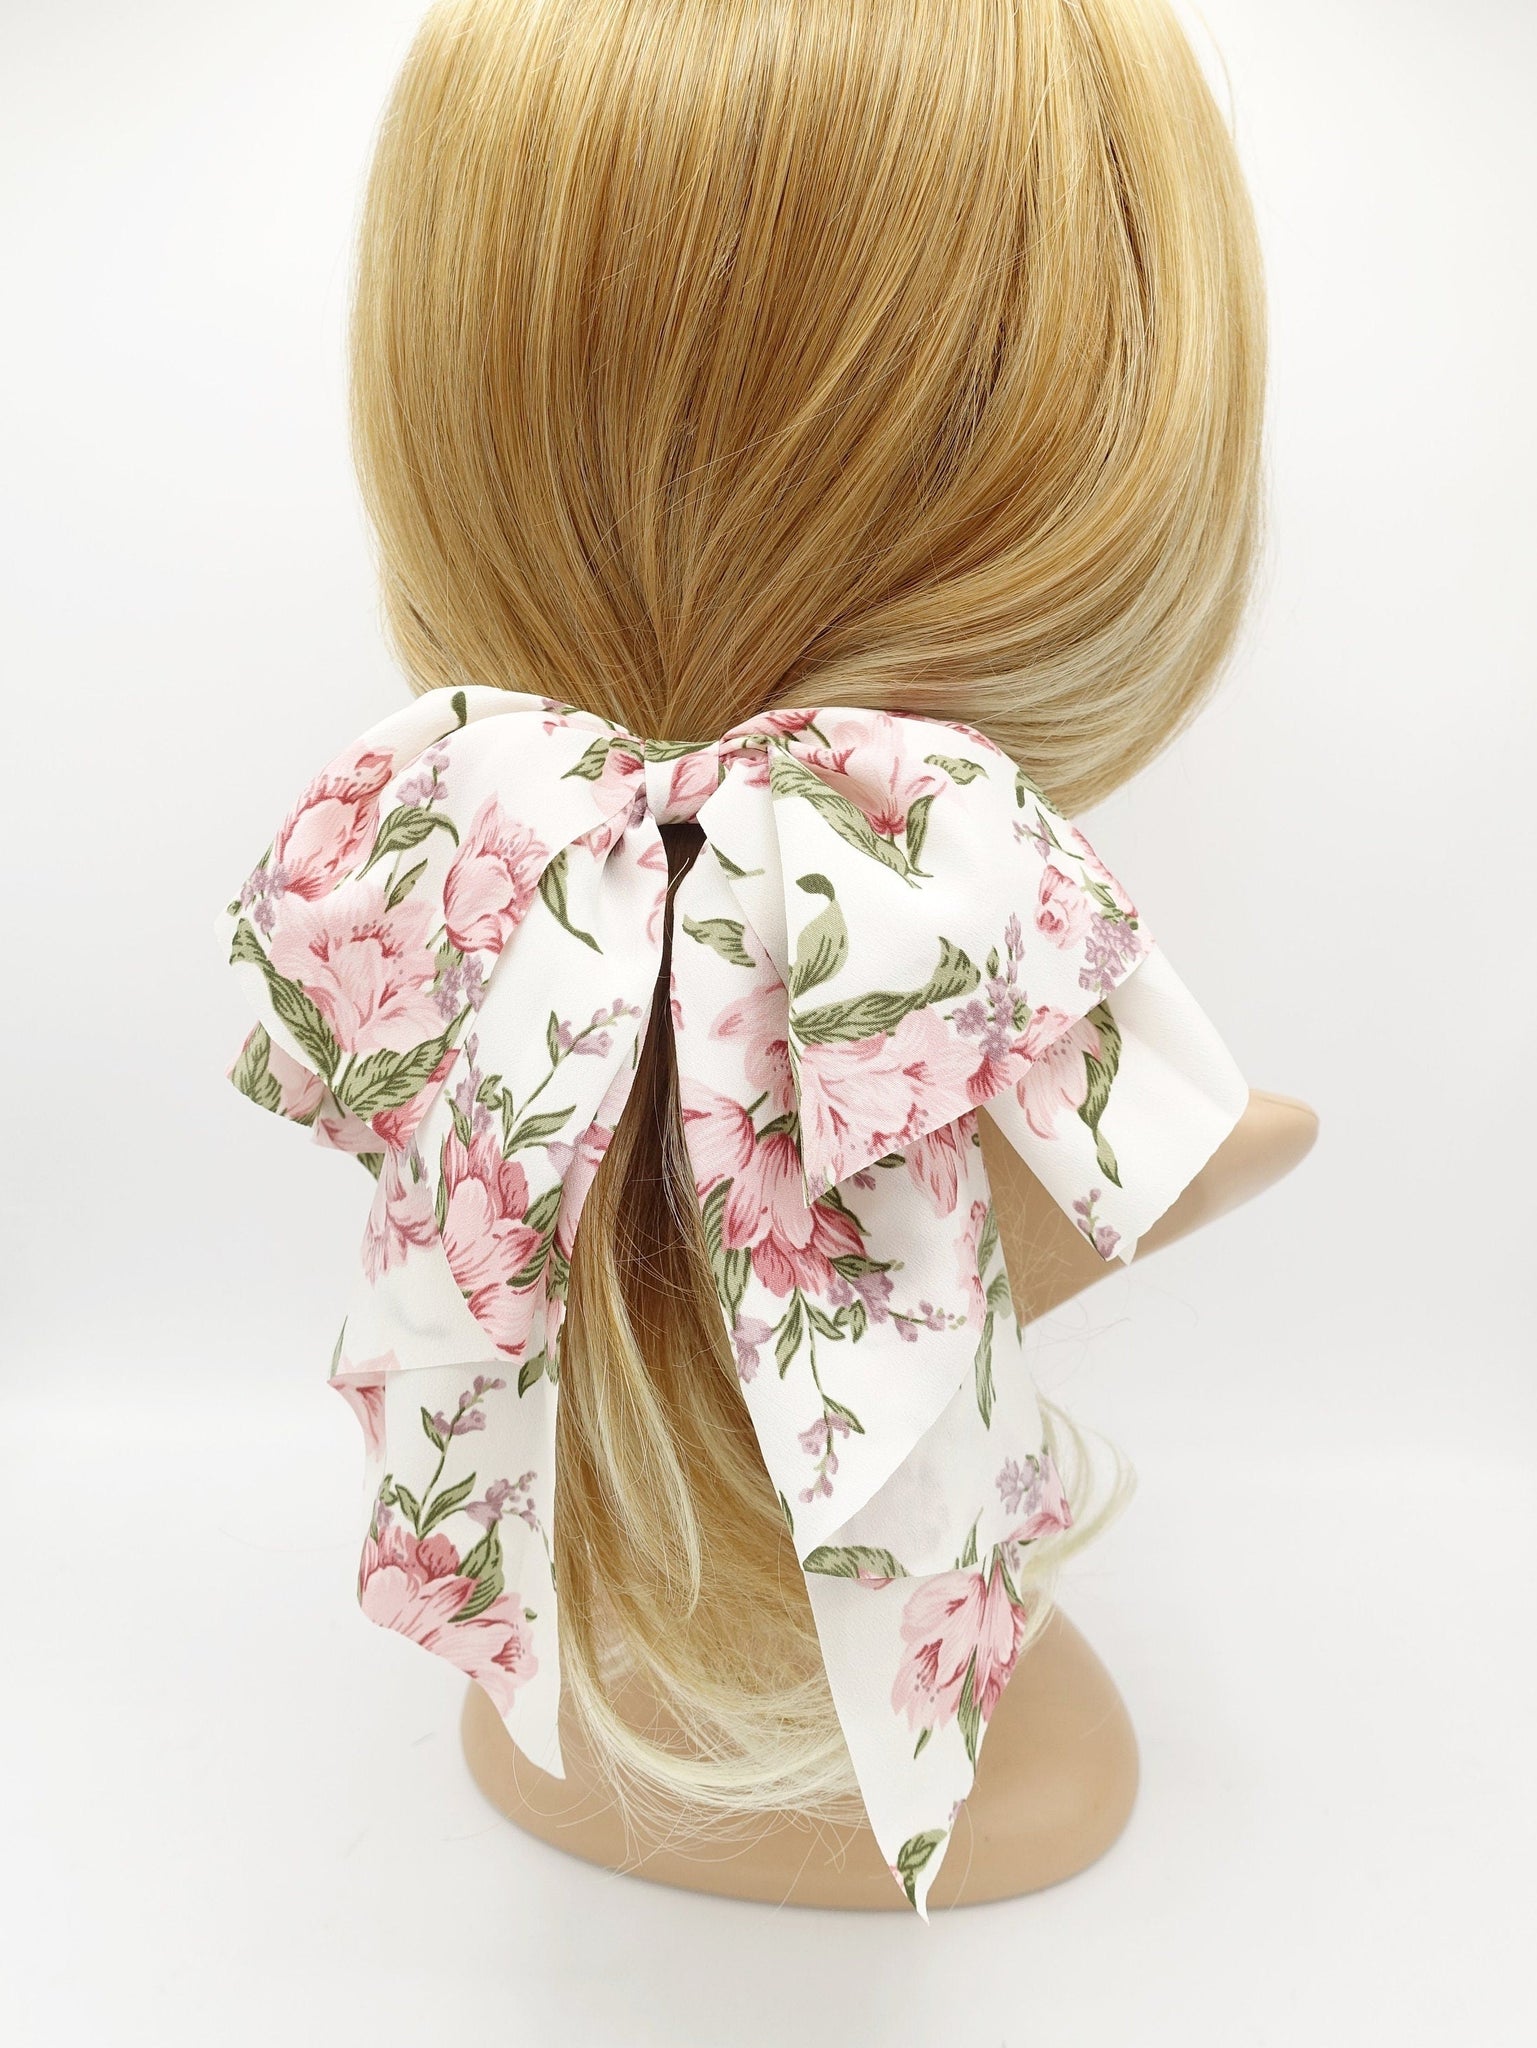 veryshine.com Barrette (Bow) Cream white big floral hair bow drape tail barrette women hair accessory